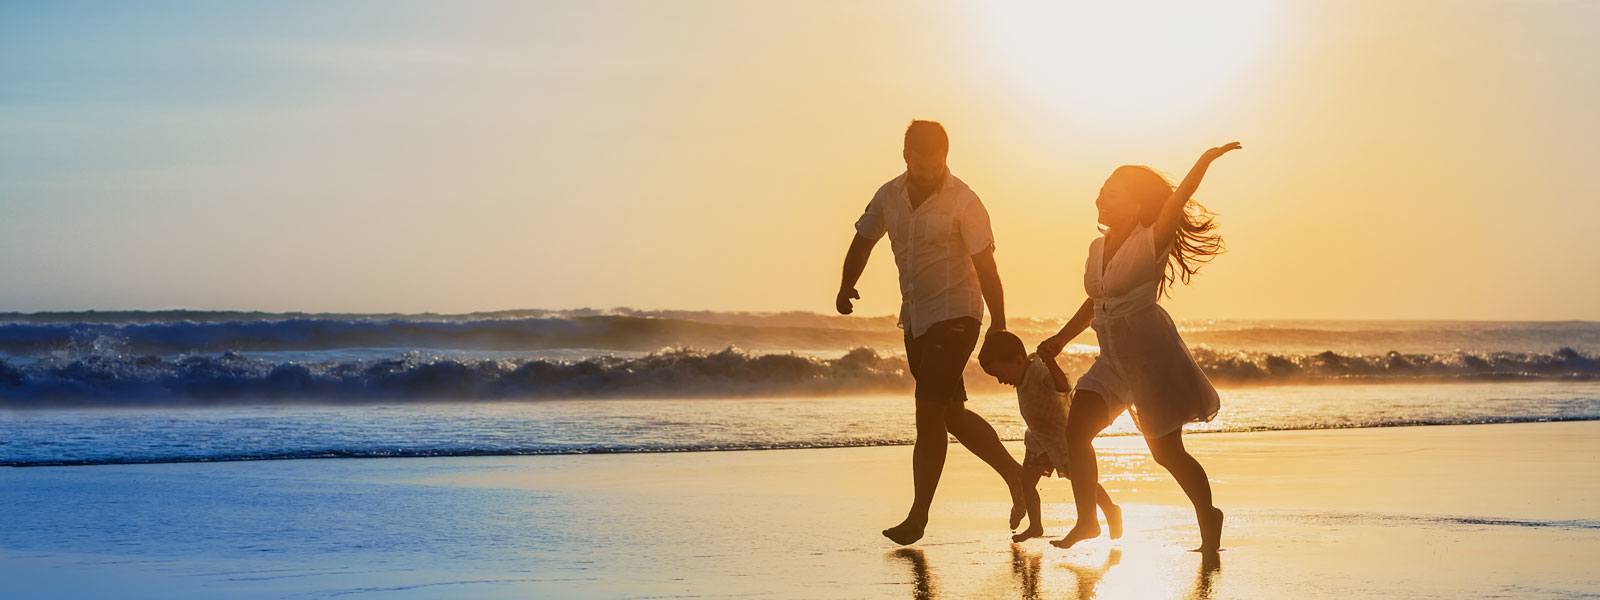 Family having fun on the beach at sunset.